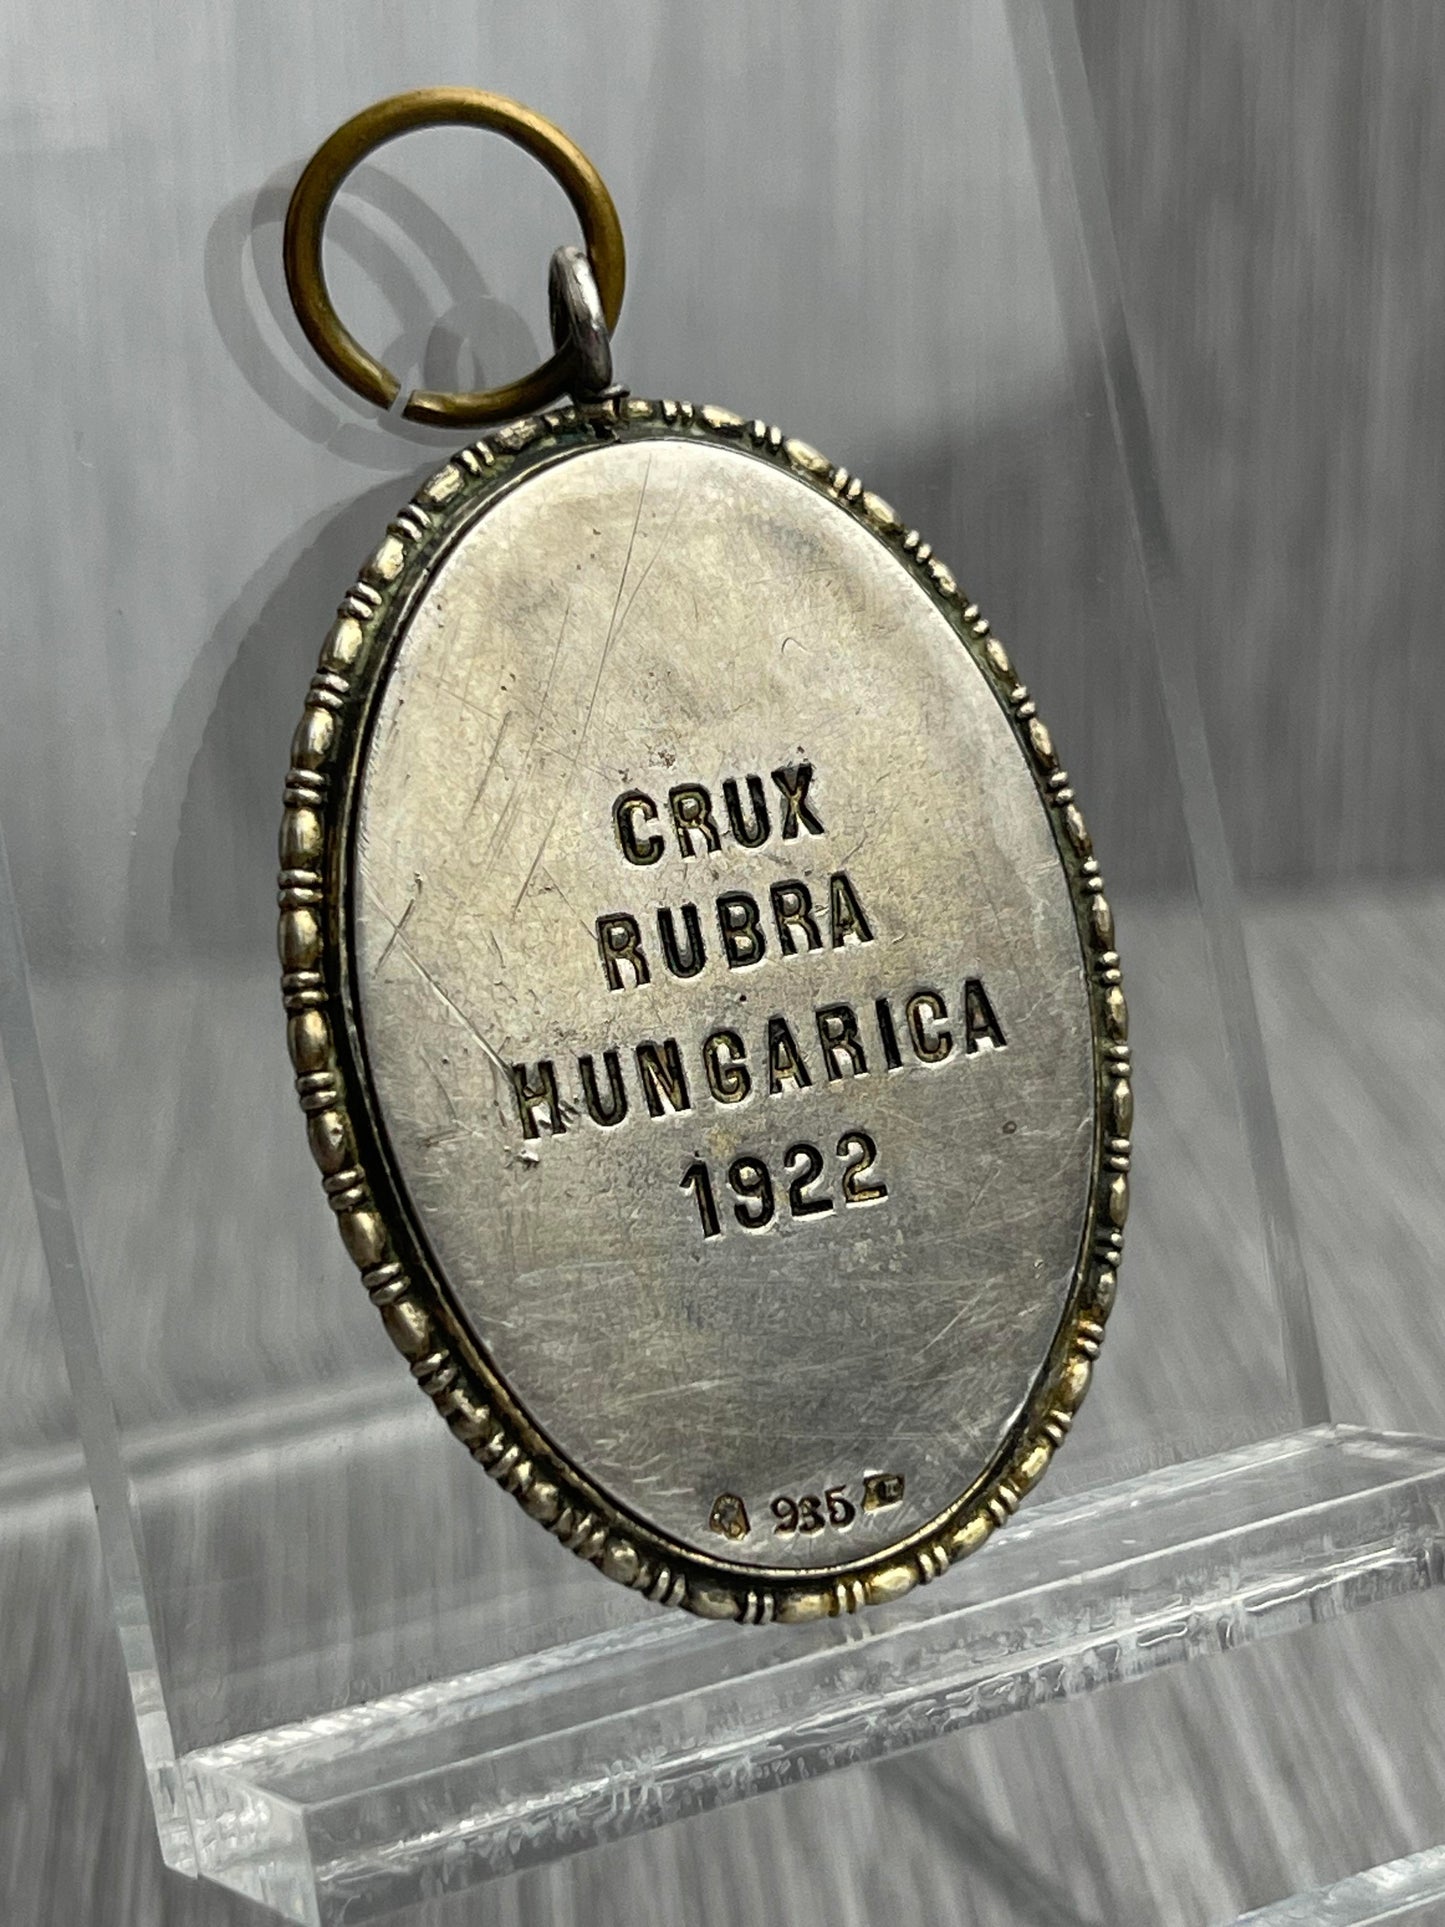 1922 CRUX RUBRA HUNGARICA 'HUNGARIAN ORDER OF MERIT' RED CROSS MEDAL .935 SILVER